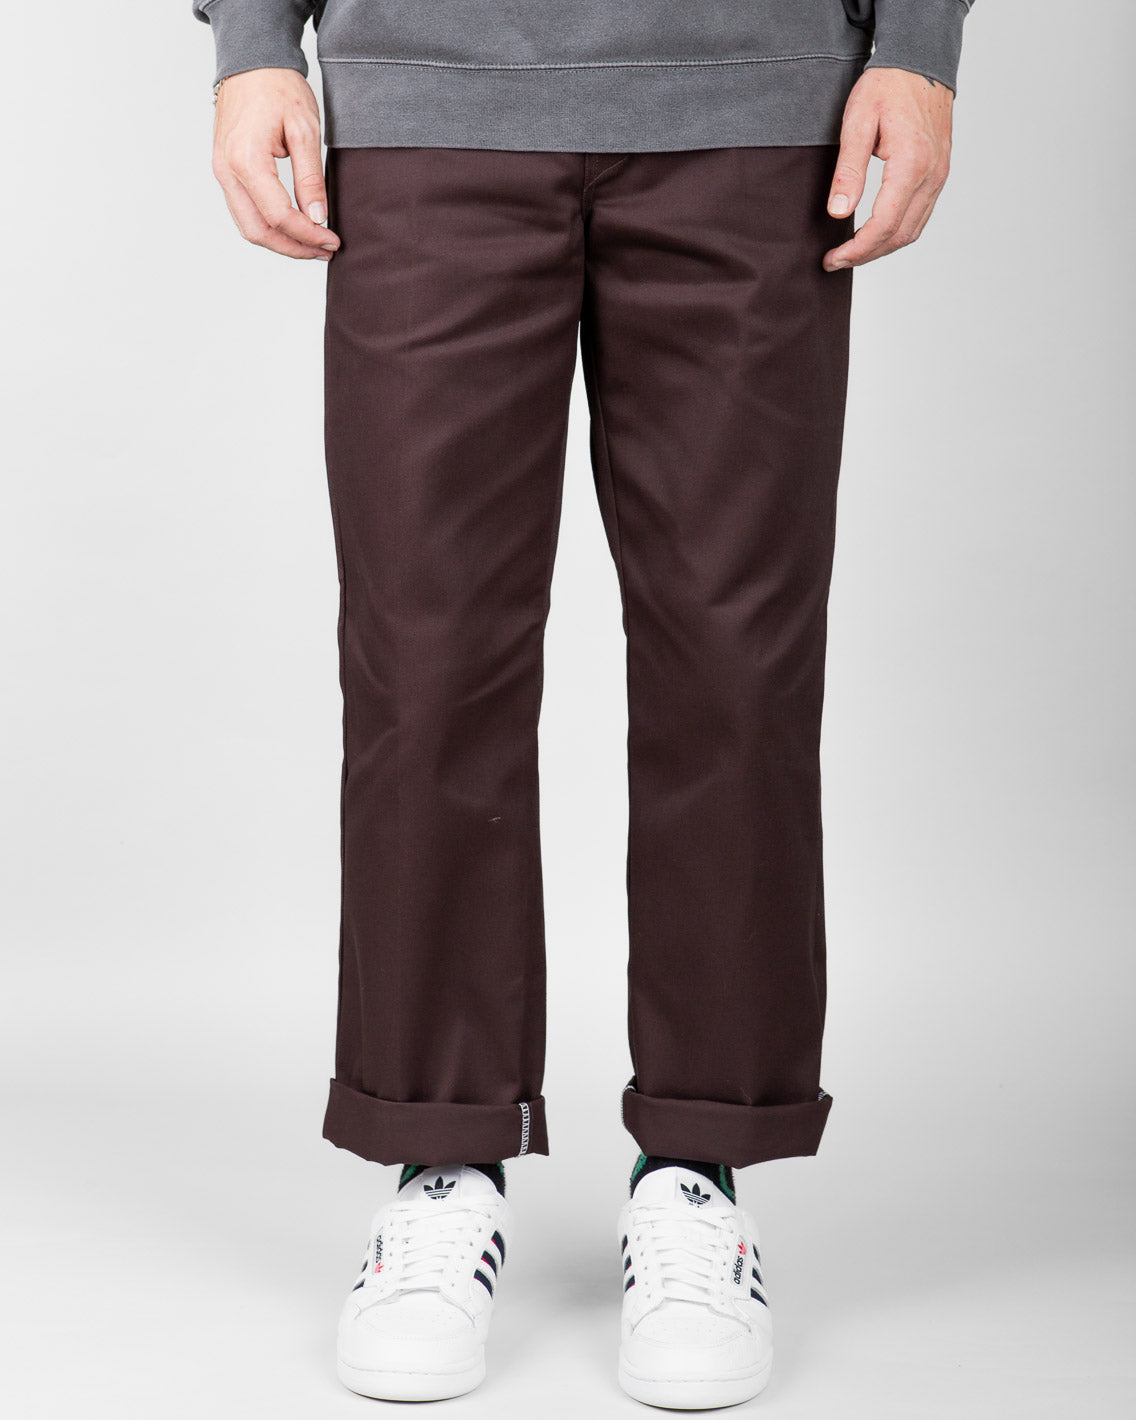 Dickies - 874 Original Fit Work Pants - Dark Brown